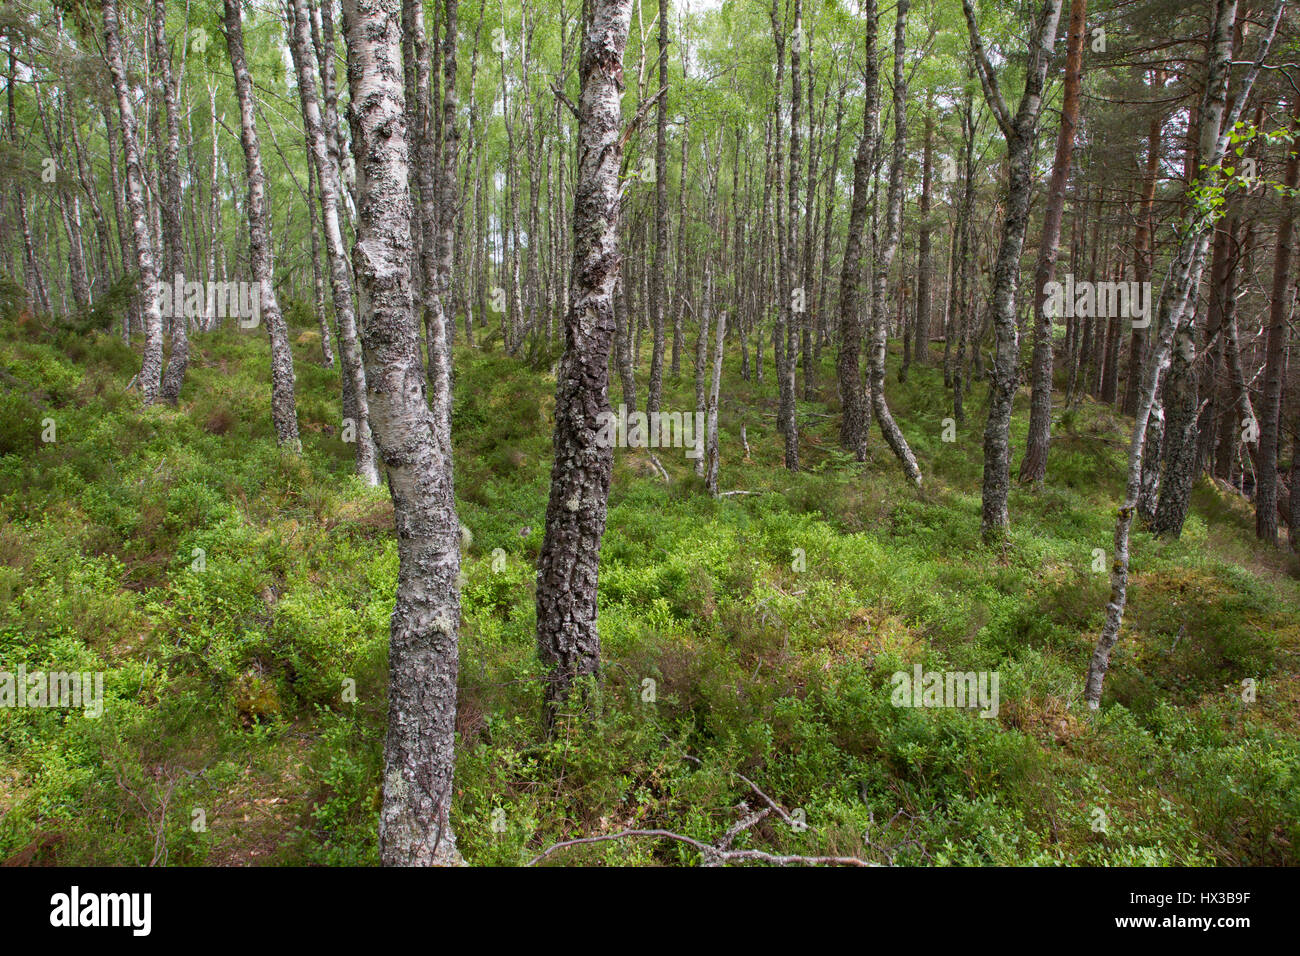 Silver Birch, Betula pendula, trees growing in woodland, Rothiemurchus Estate, The Highlands, Scotland, UK. Stock Photo